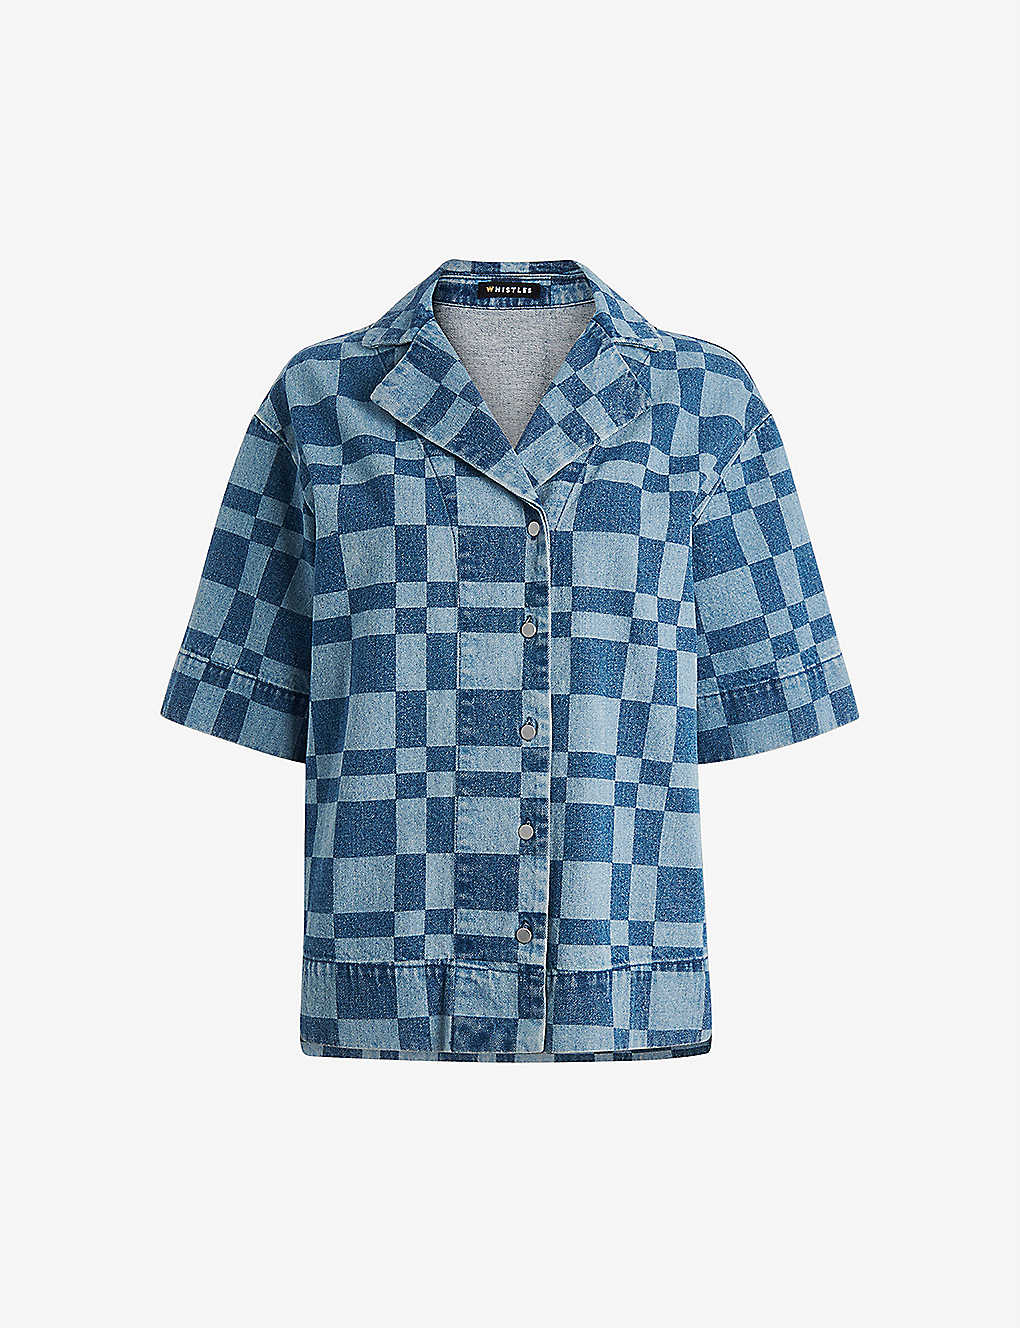 Whistles Billie Bleach Checkerboard Shirt In Multi-coloured